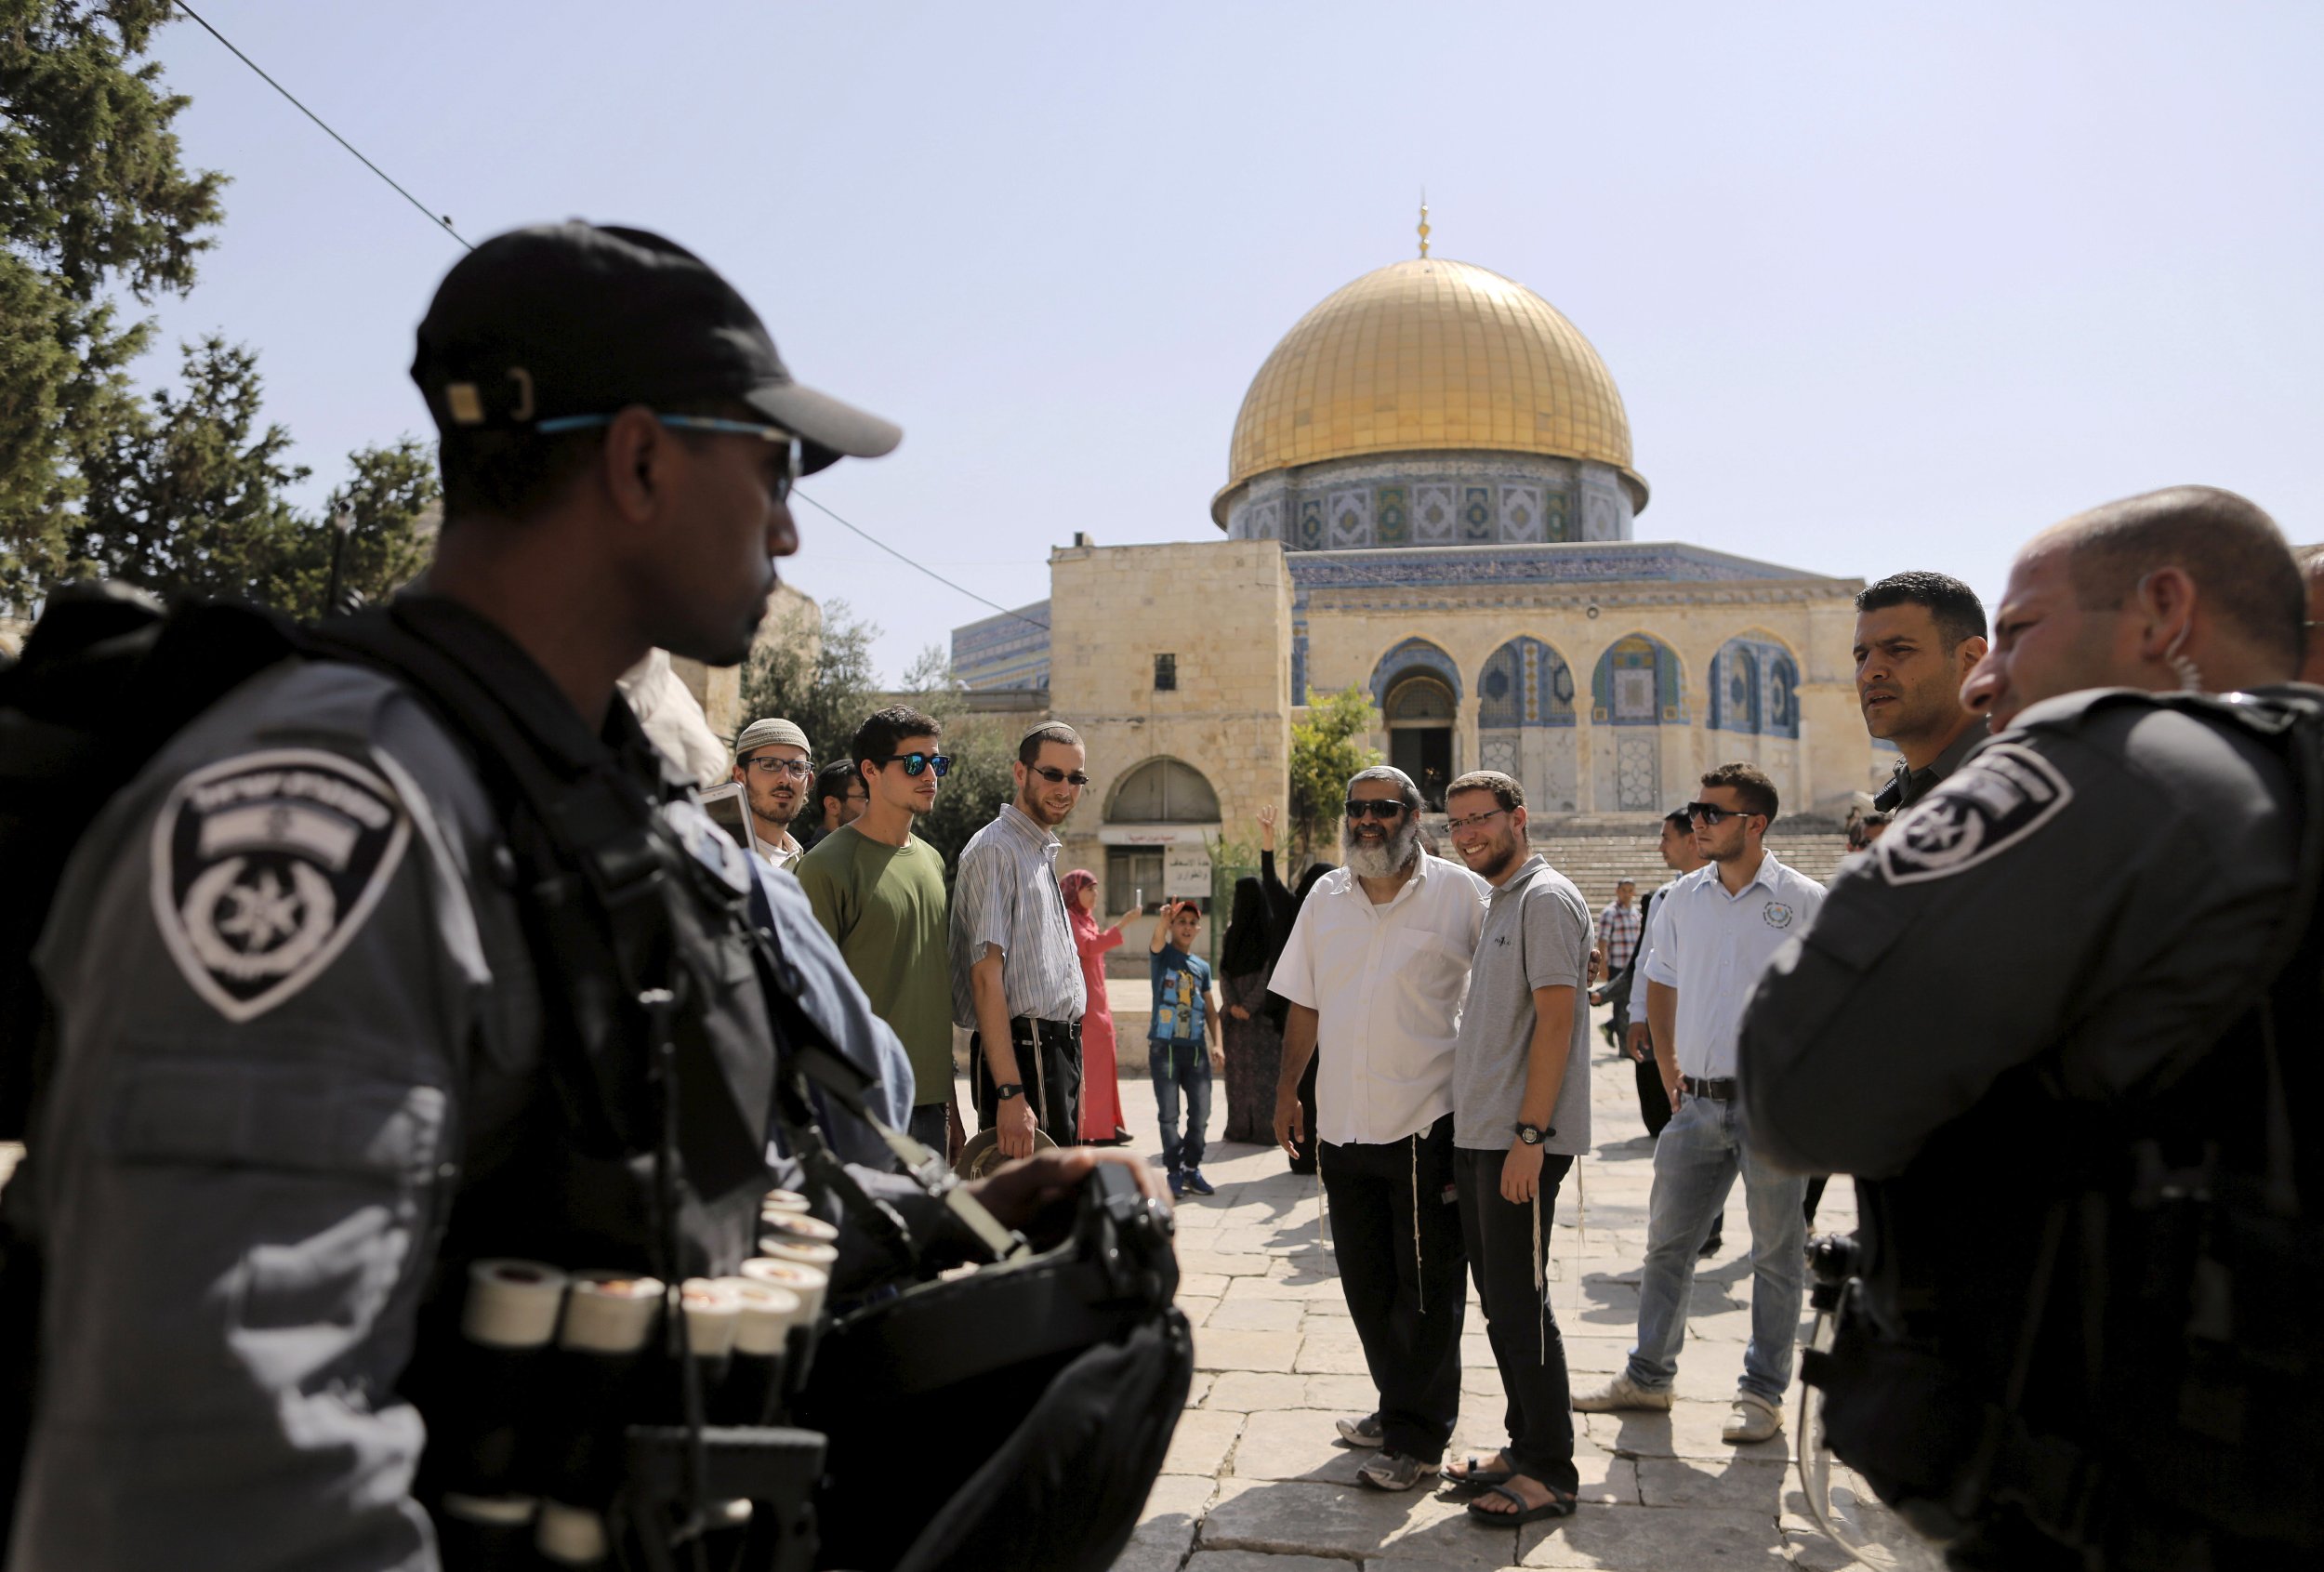 Muslims Harass Congressmen Visiting Temple Mount In Israel